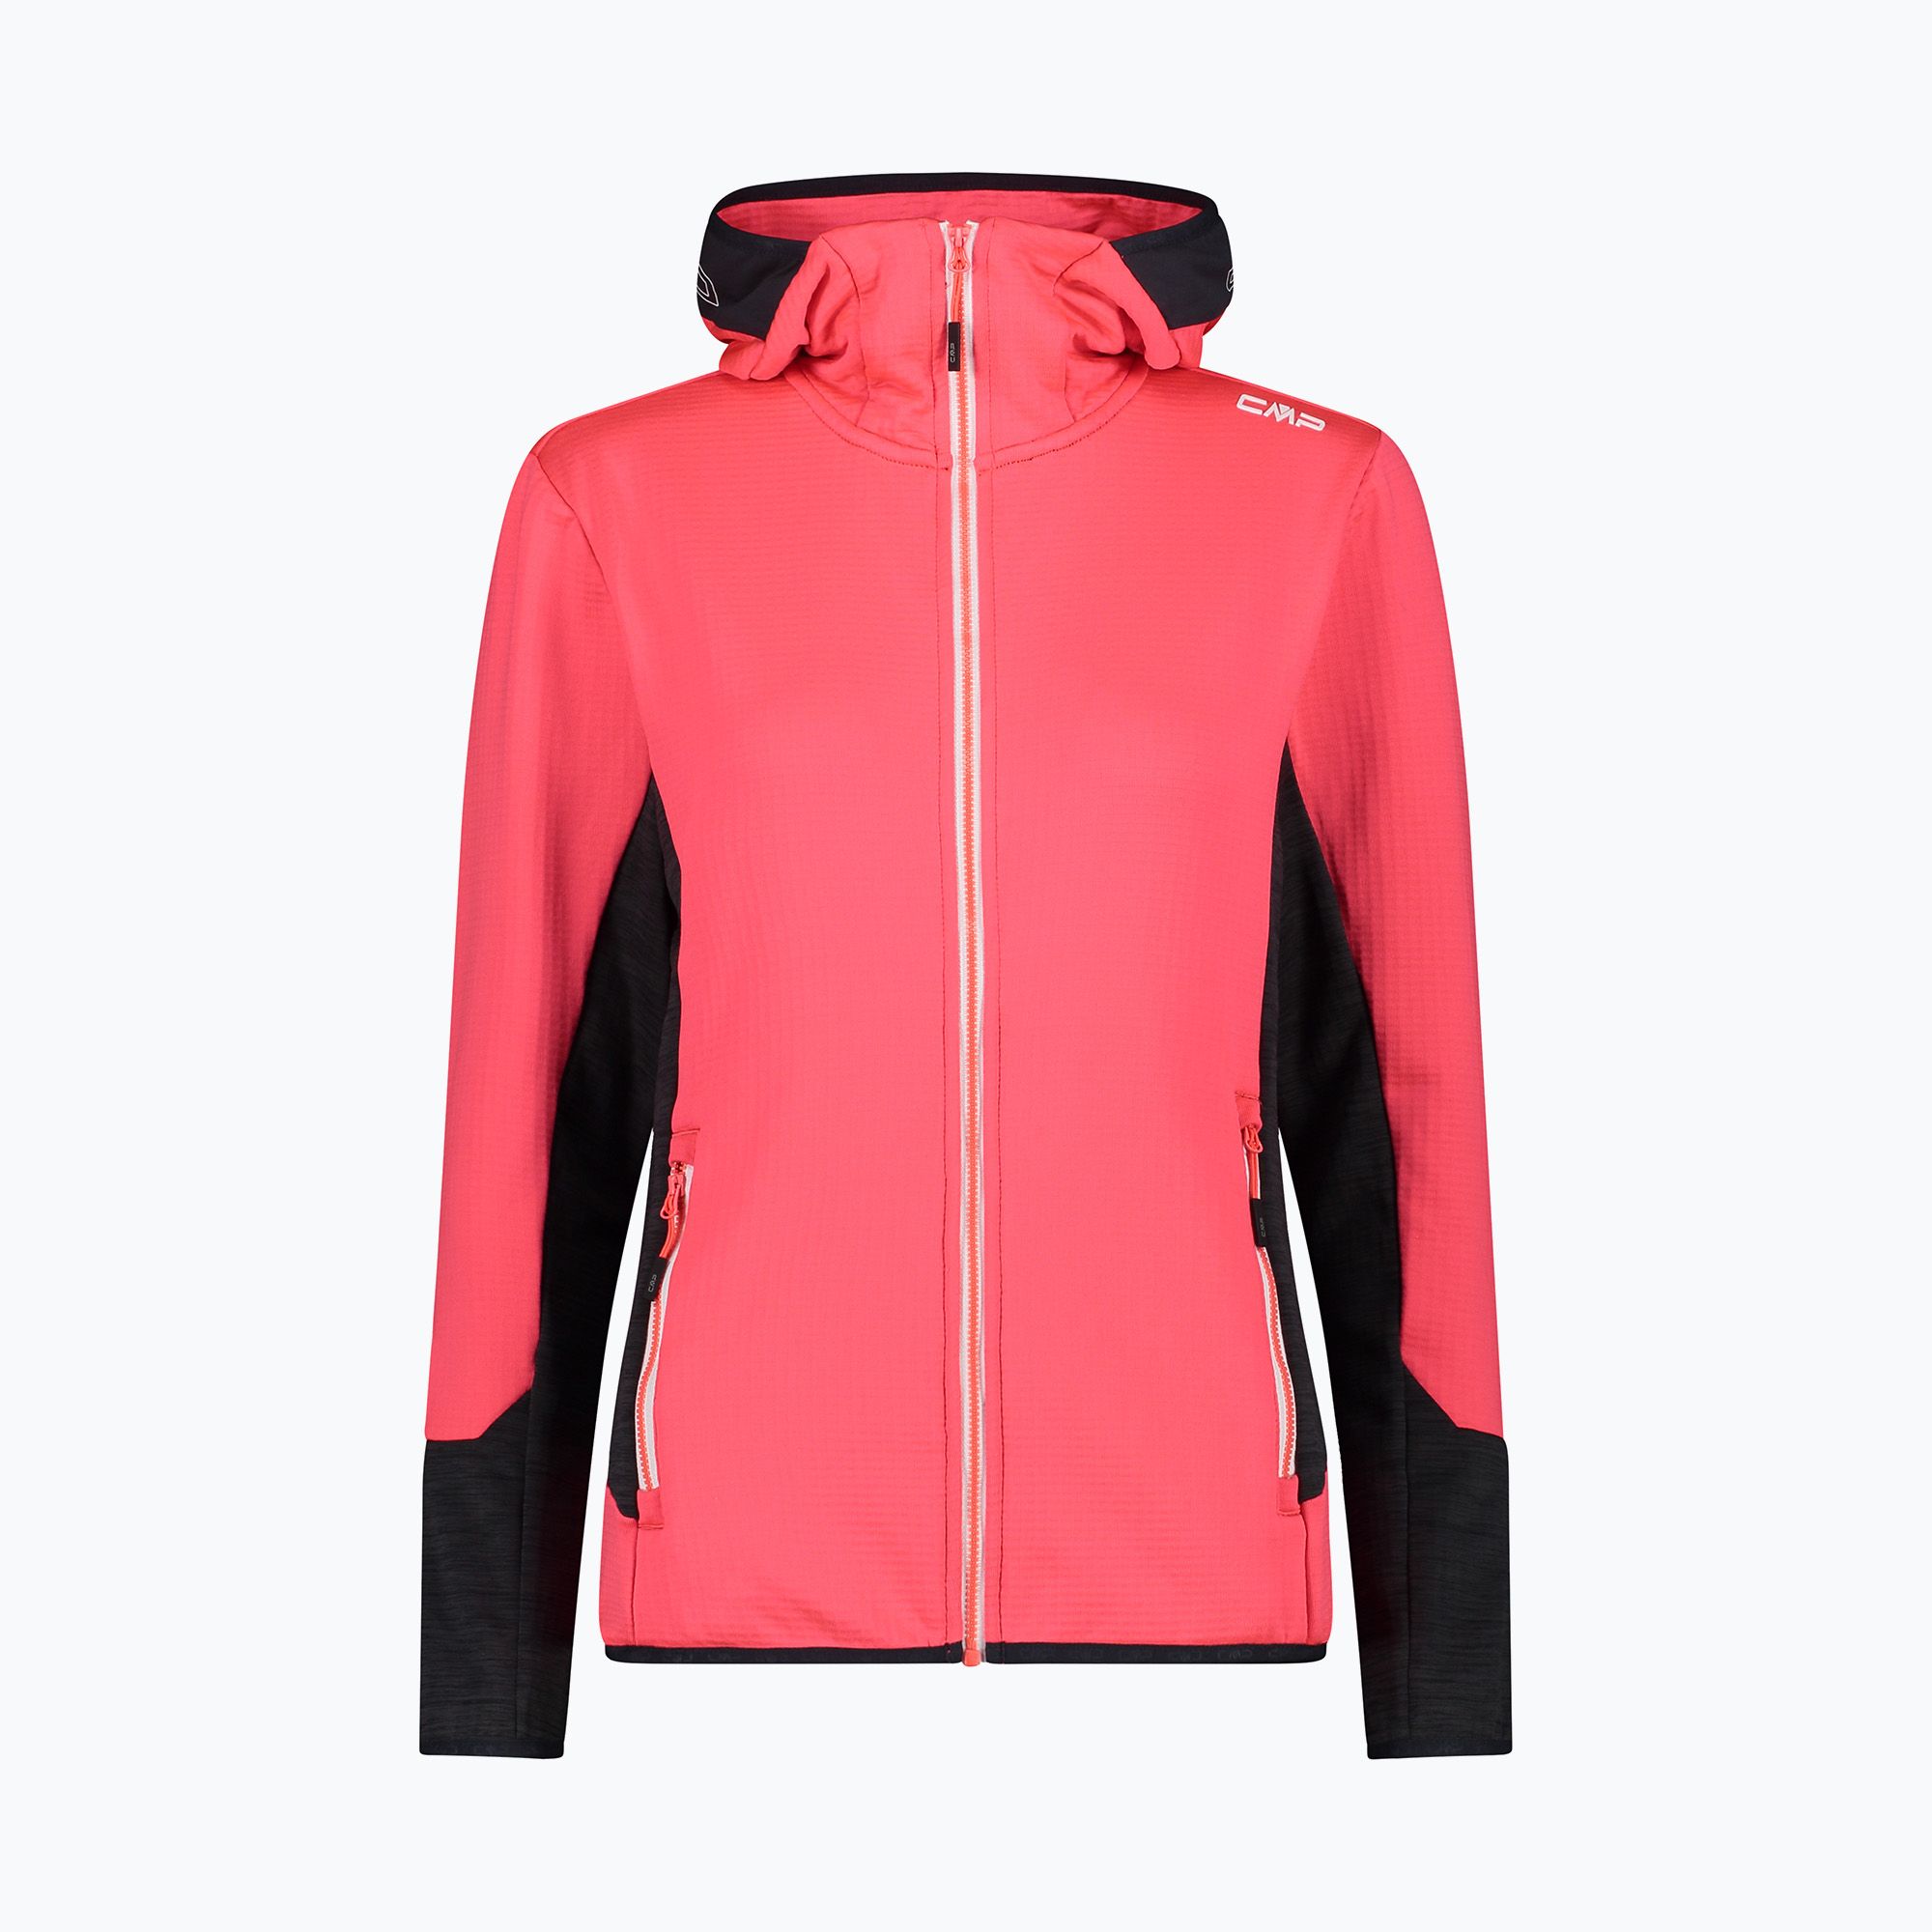 CMP women's skit jacket 33G2696/C649 red fluo